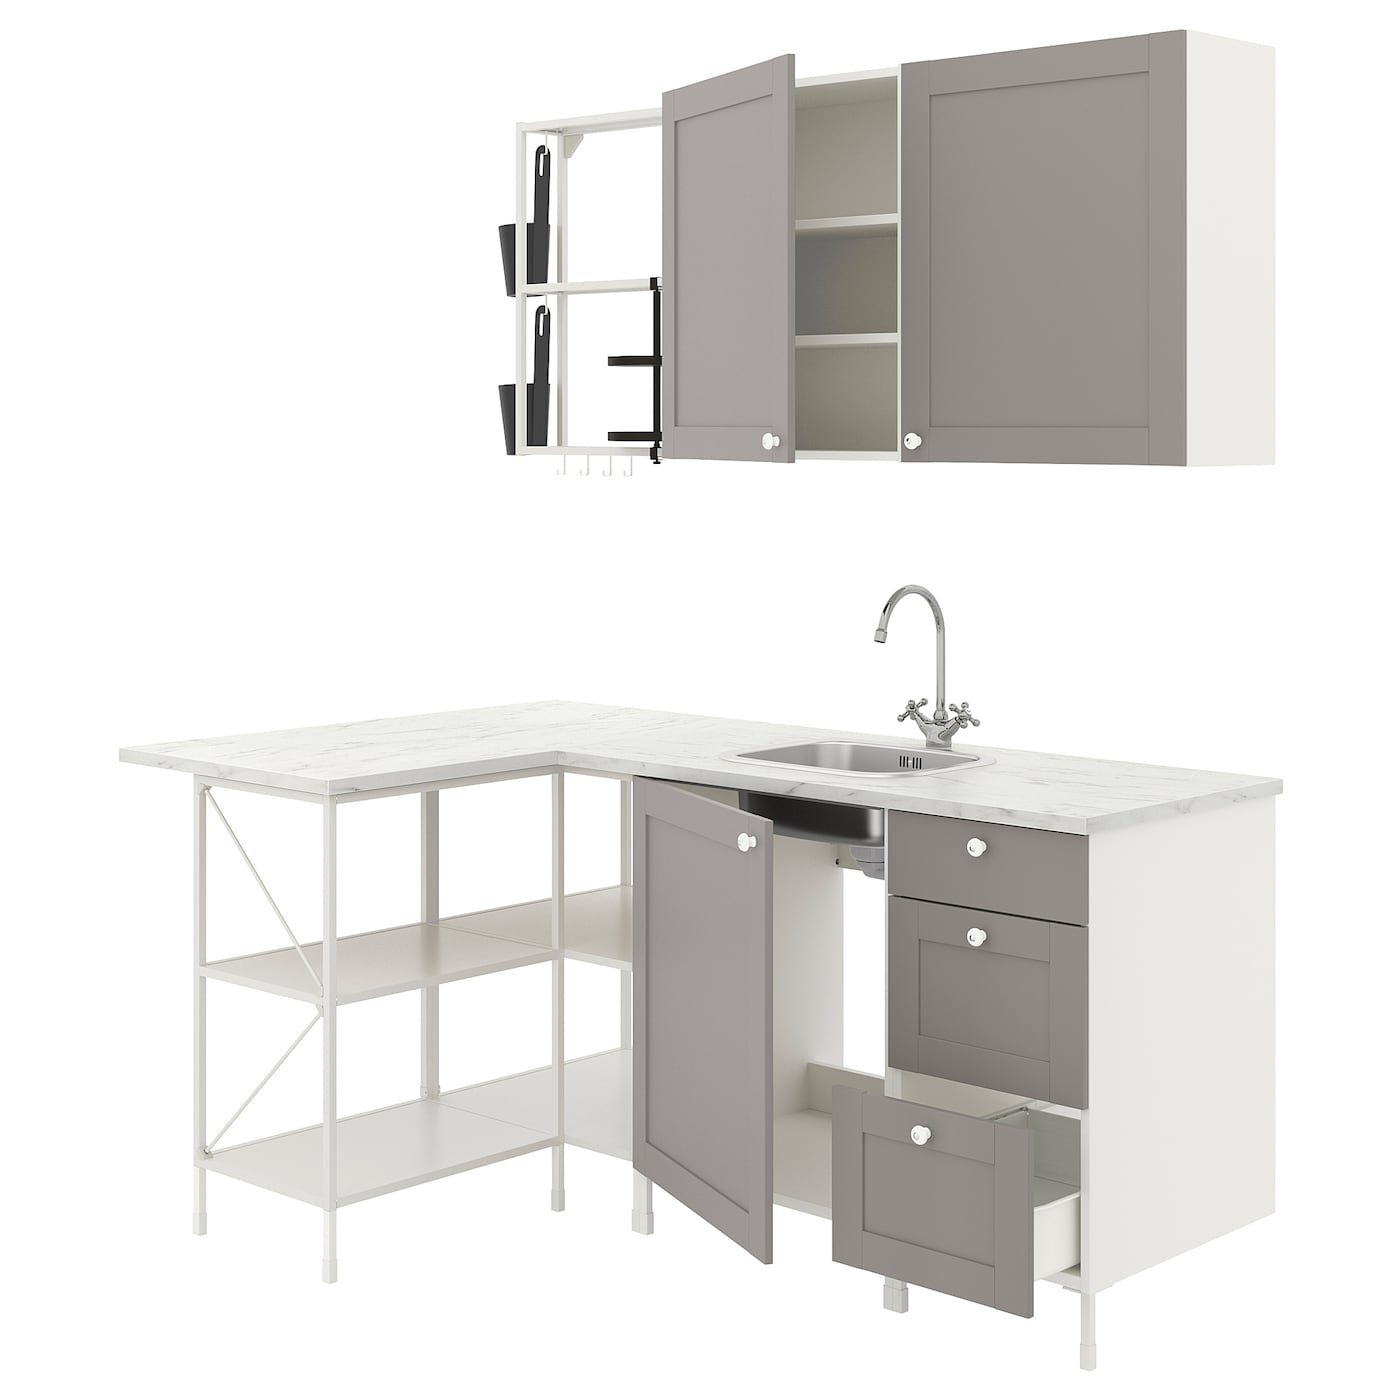 Угловая кухонная комбинация для хранения - ENHET  IKEA/ ЭНХЕТ ИКЕА, 121,5х185х75  см, белый/серый